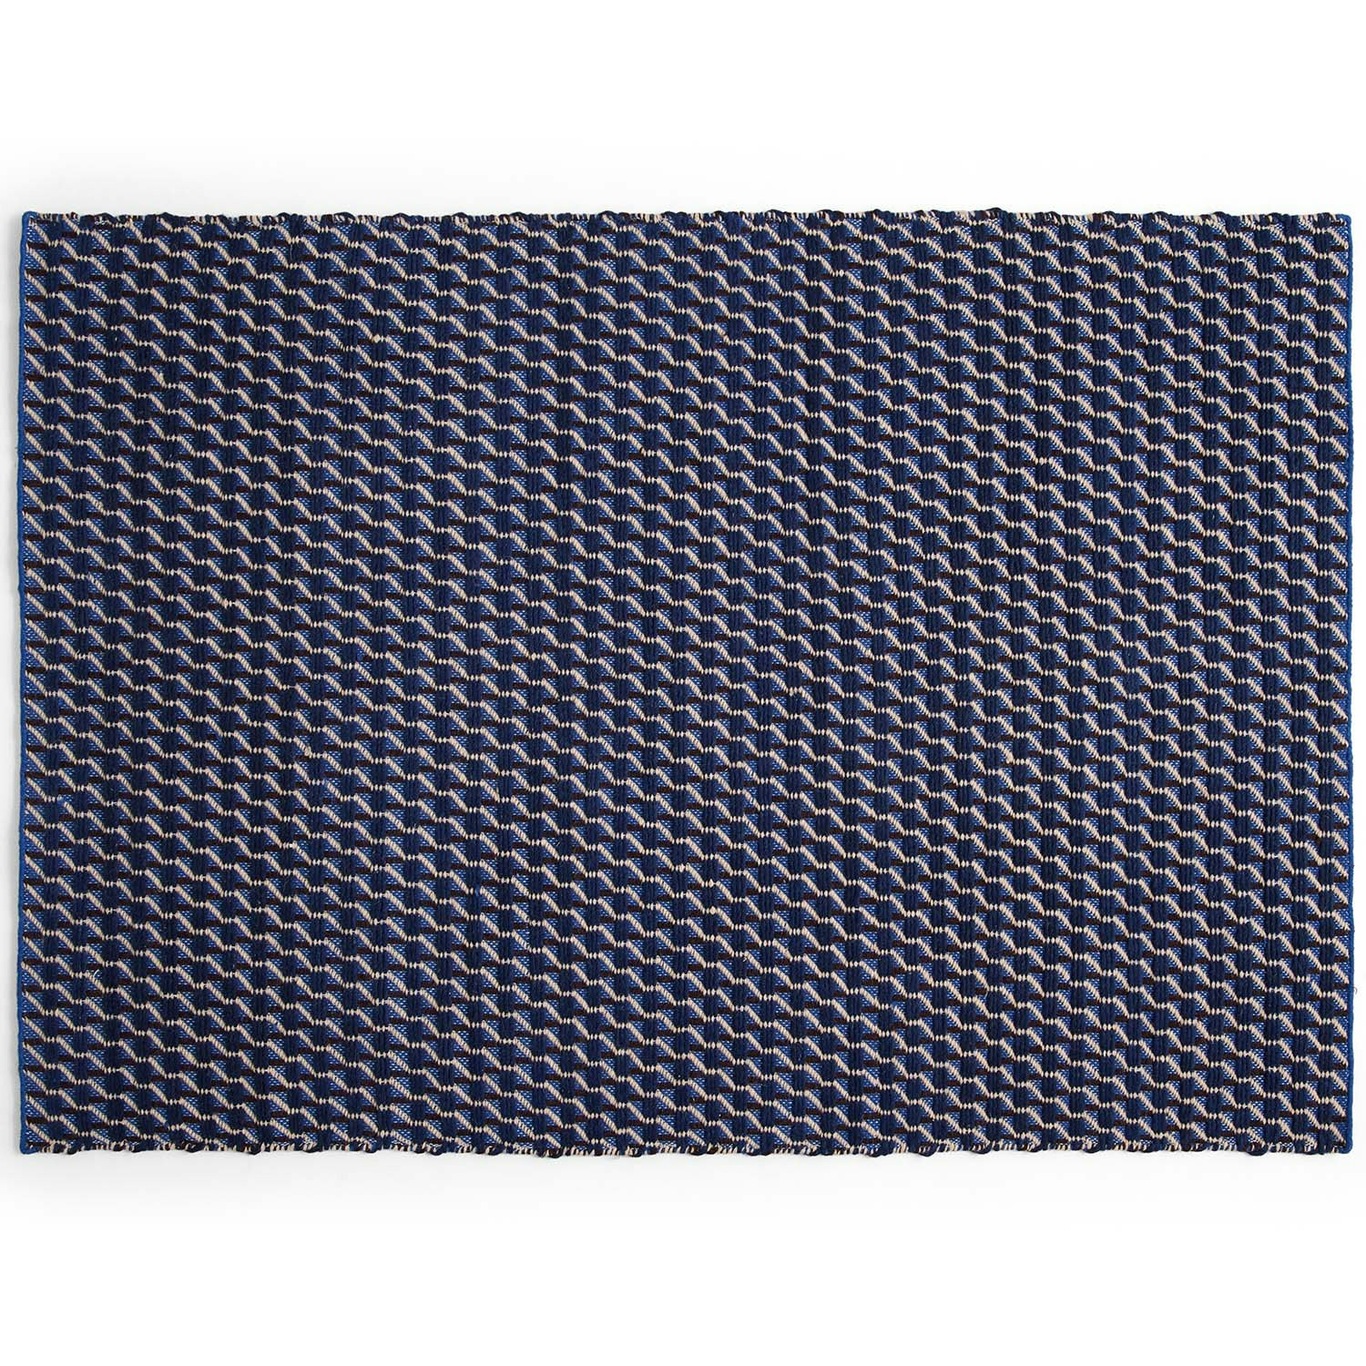 Channel Rug Blue/White, 170x240 cm